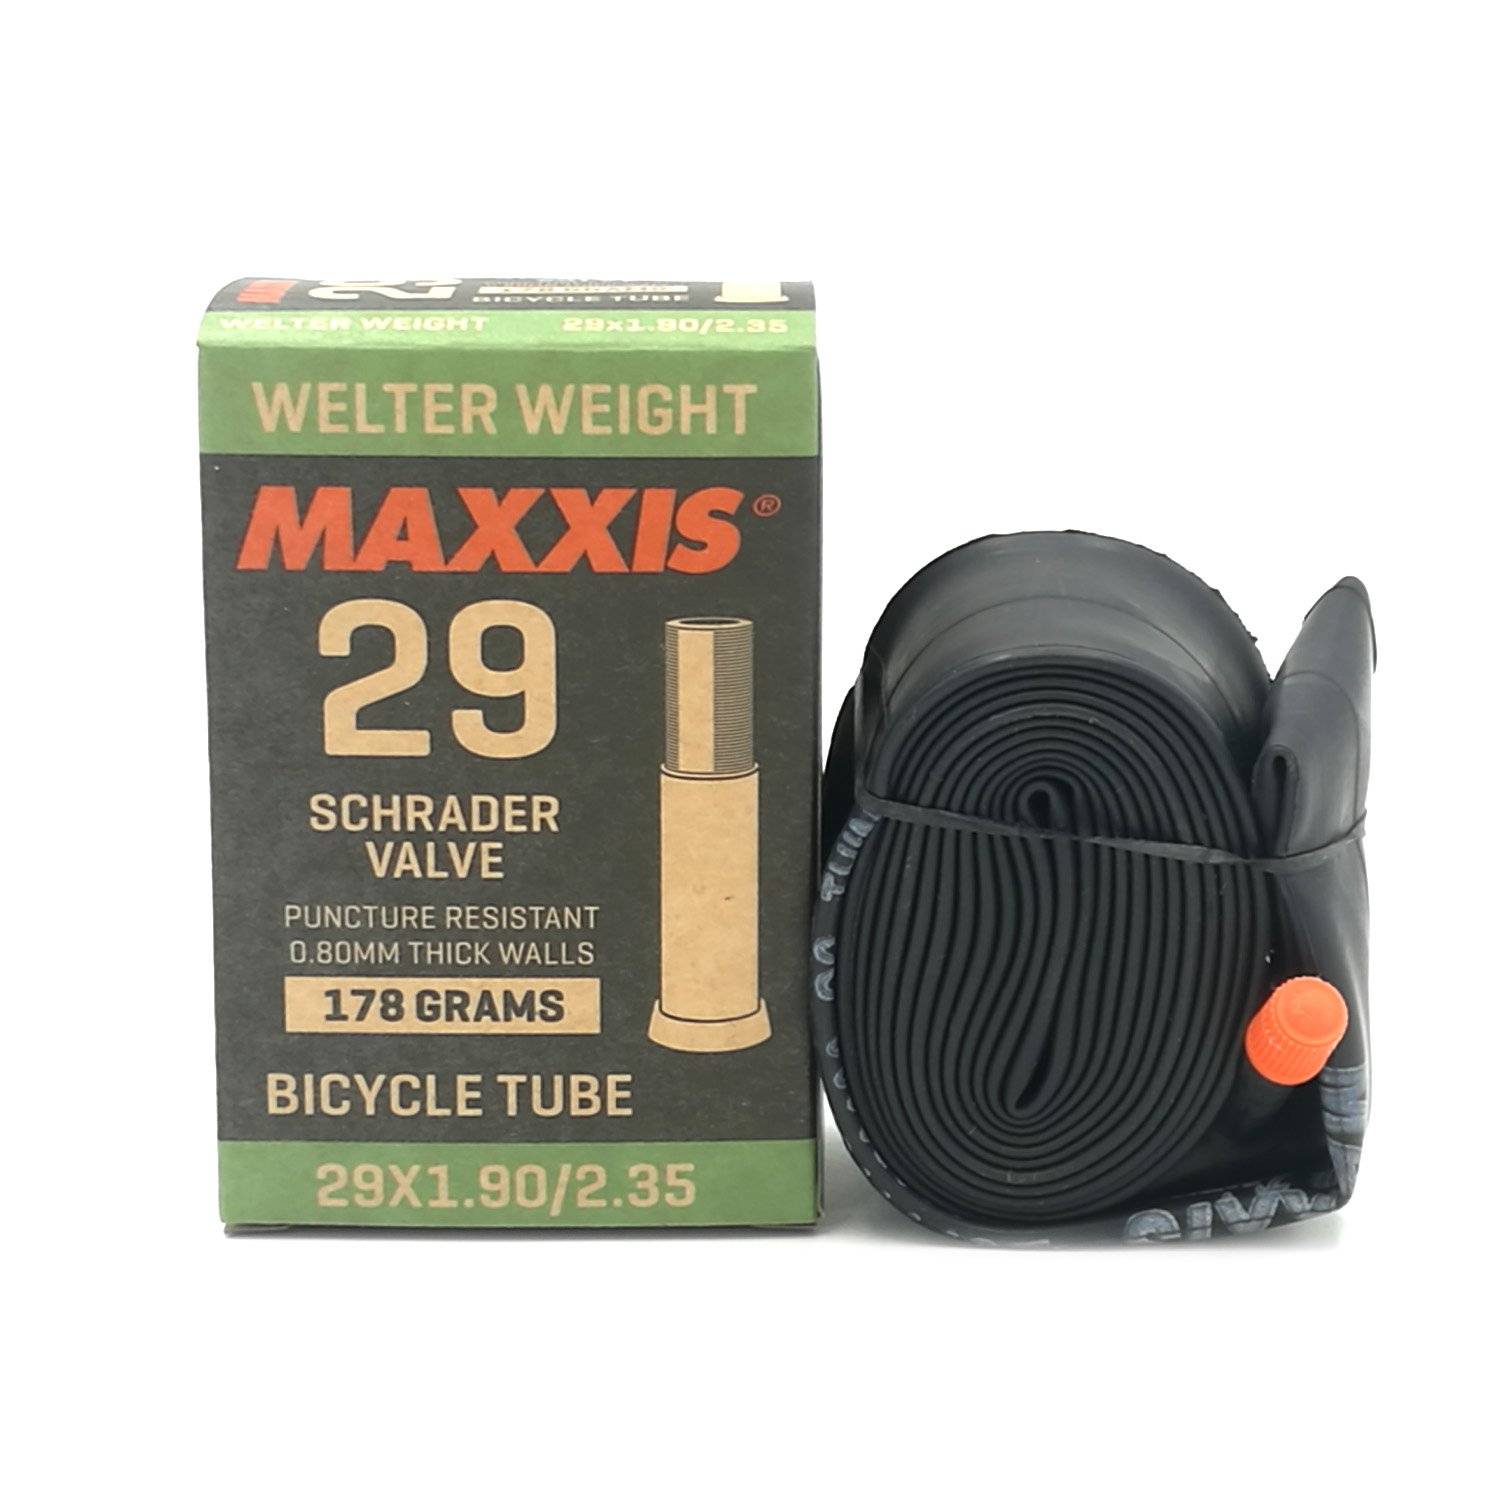 Камера Maxxis Welter, 29×1.9/2.35, Weight, 0.9mm, автониппель